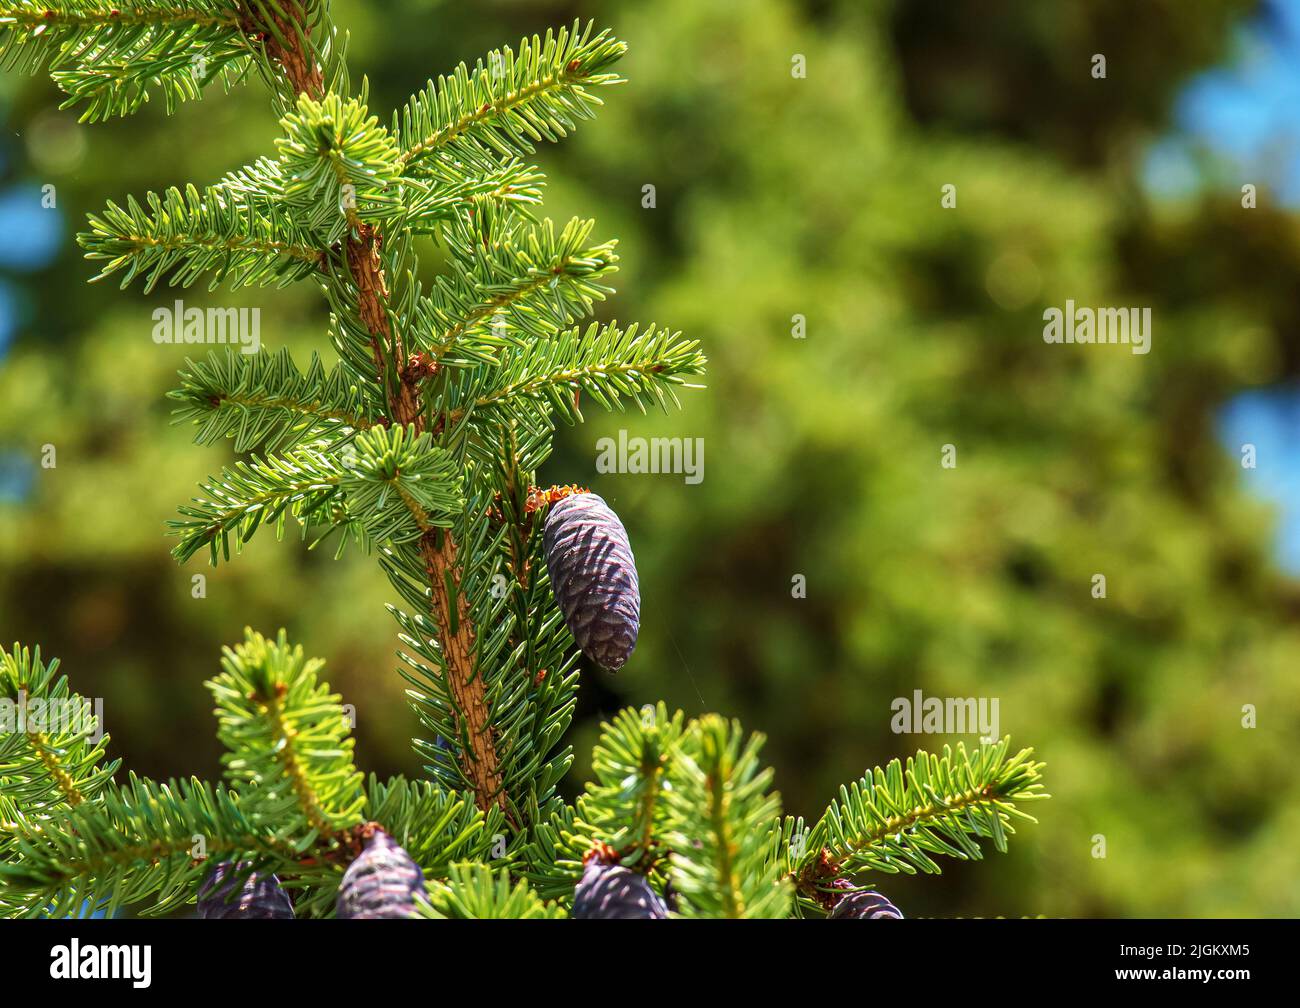 Needles and cones of Picea mariana, black spruce. Needles and cones of Picea mariana, black spruce. Stock Photo